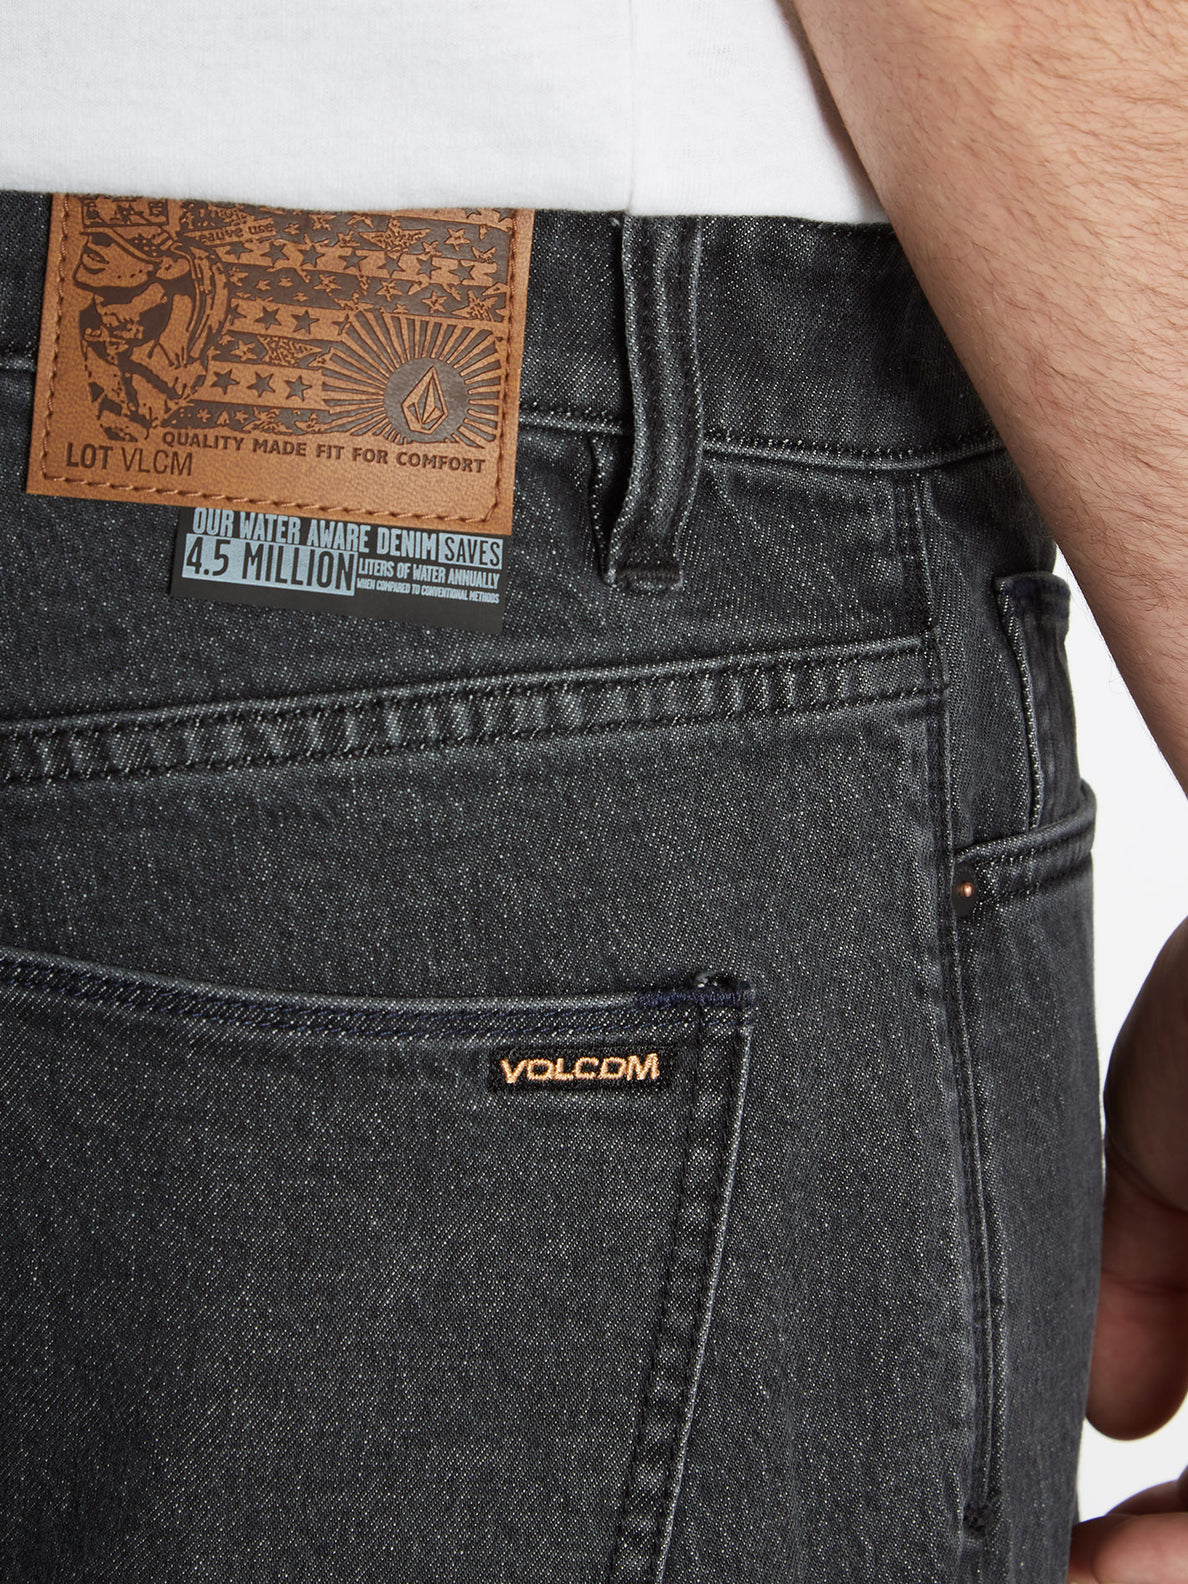 Modown Tapered Jeans - Stoney Black (A1932102_STY) [2]